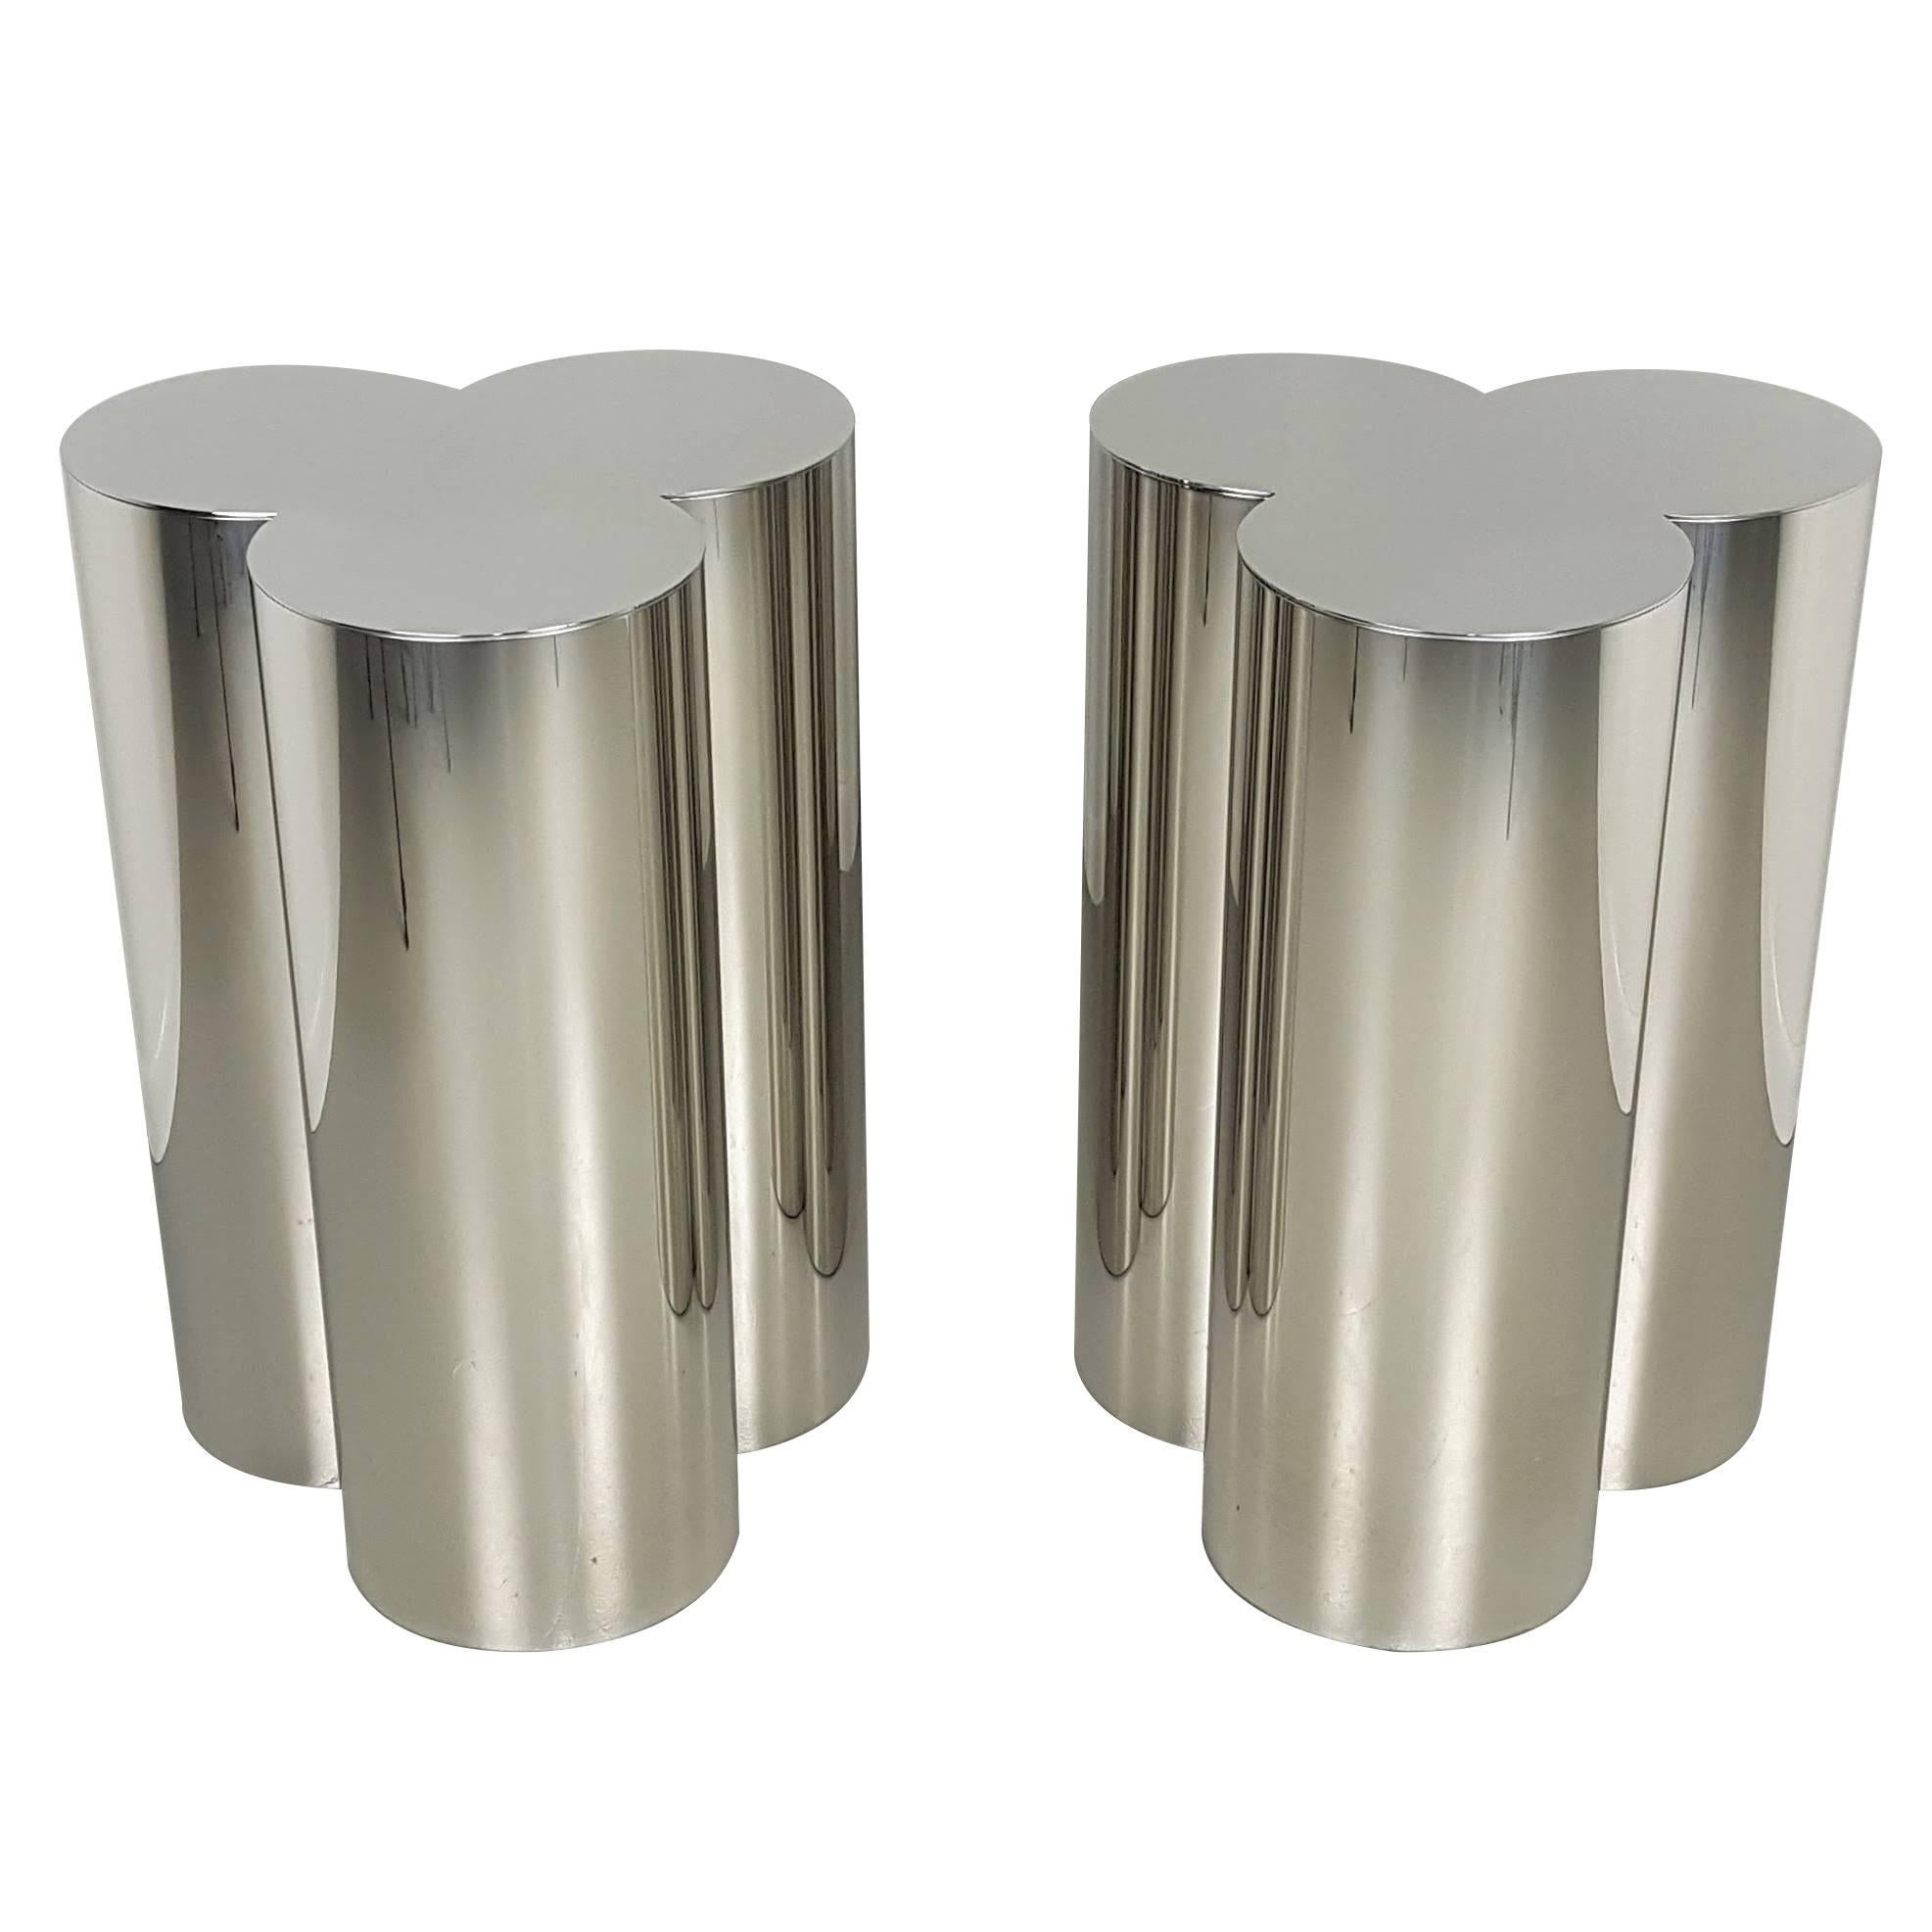 Pair of Custom Trefoil Dining Table Base Pedestals in Mirror Stainless Steel